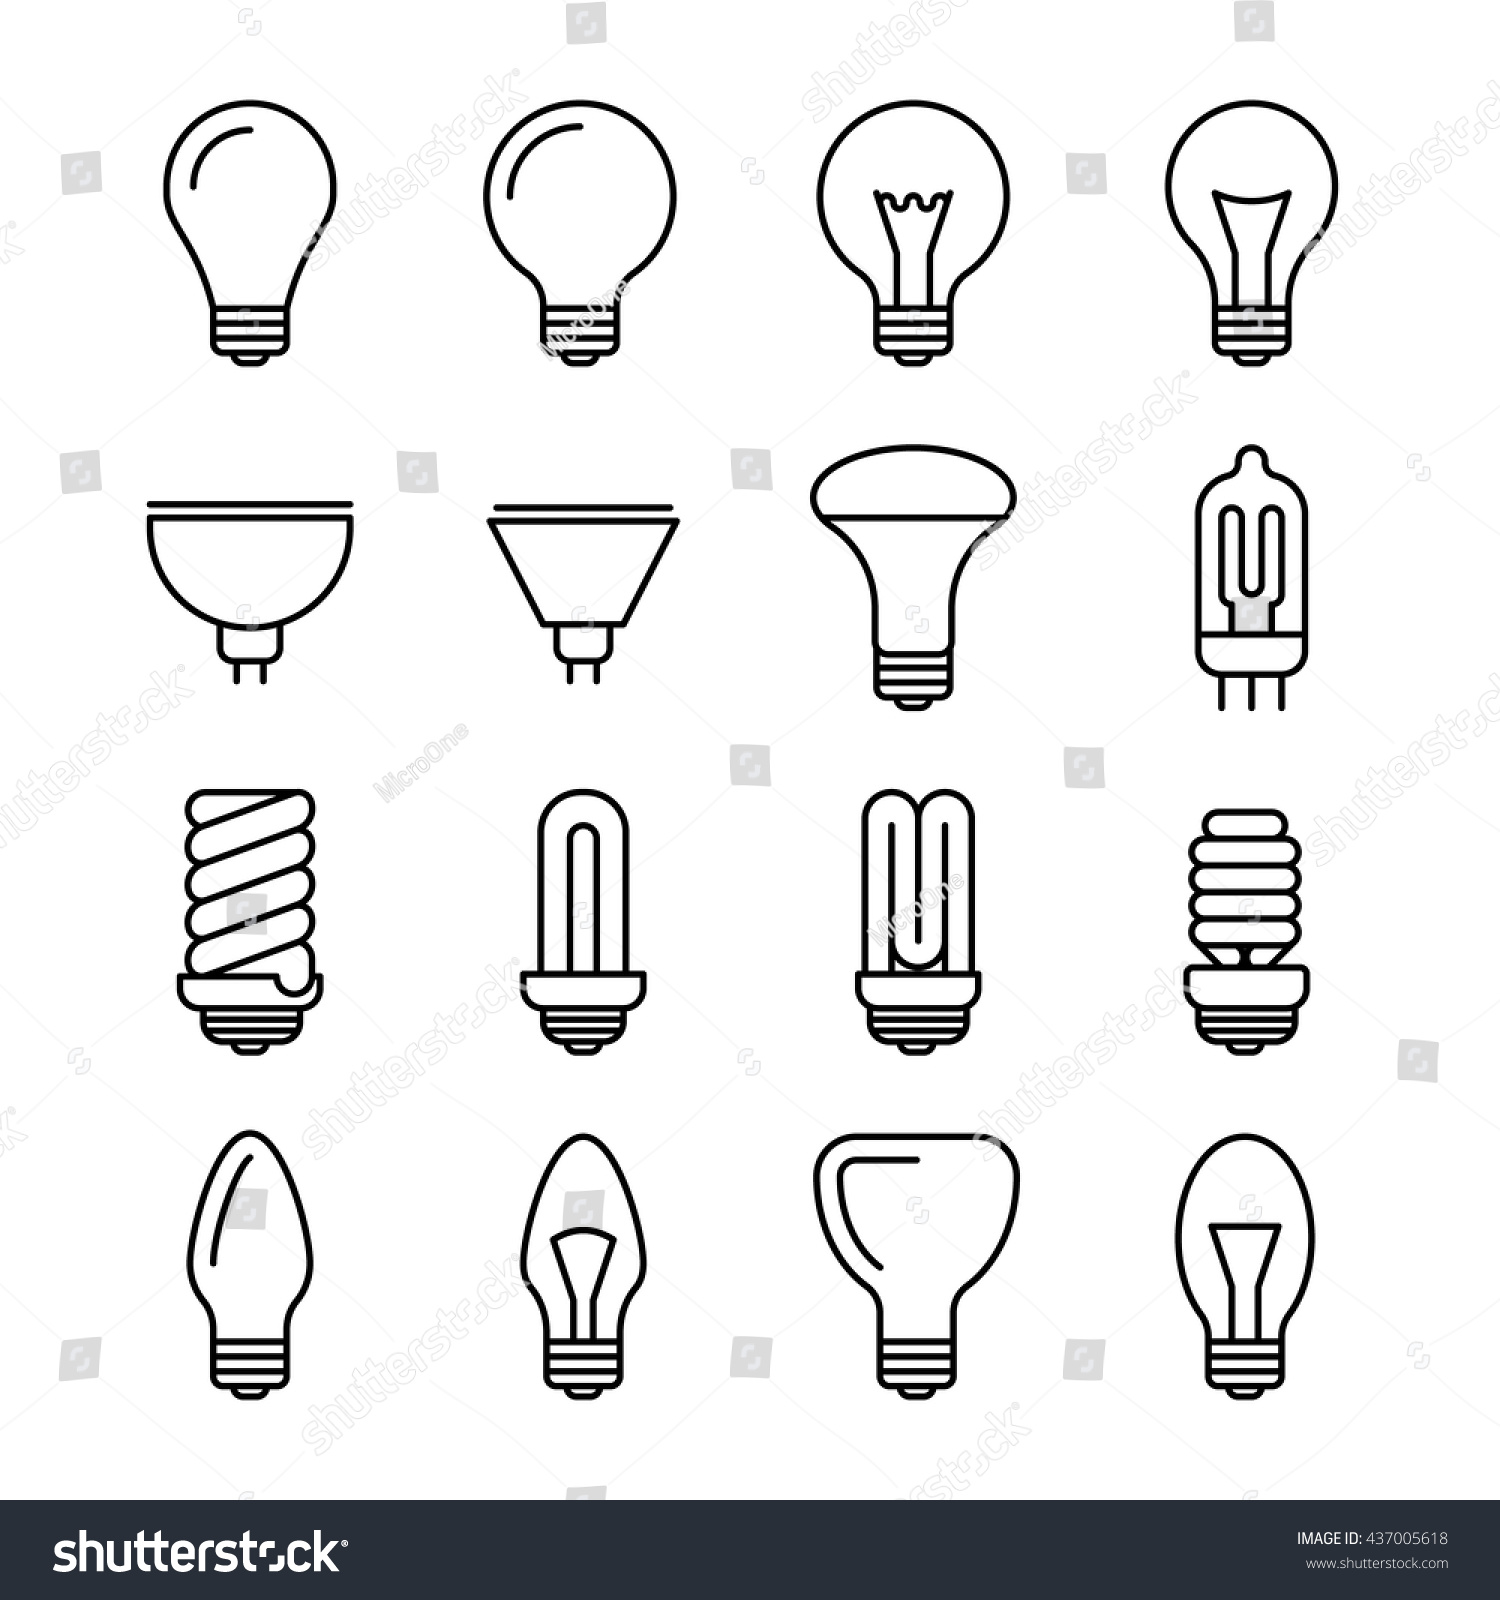 Light Bulb Outline Vector Icons Energy Stock Vector 437005618 ...